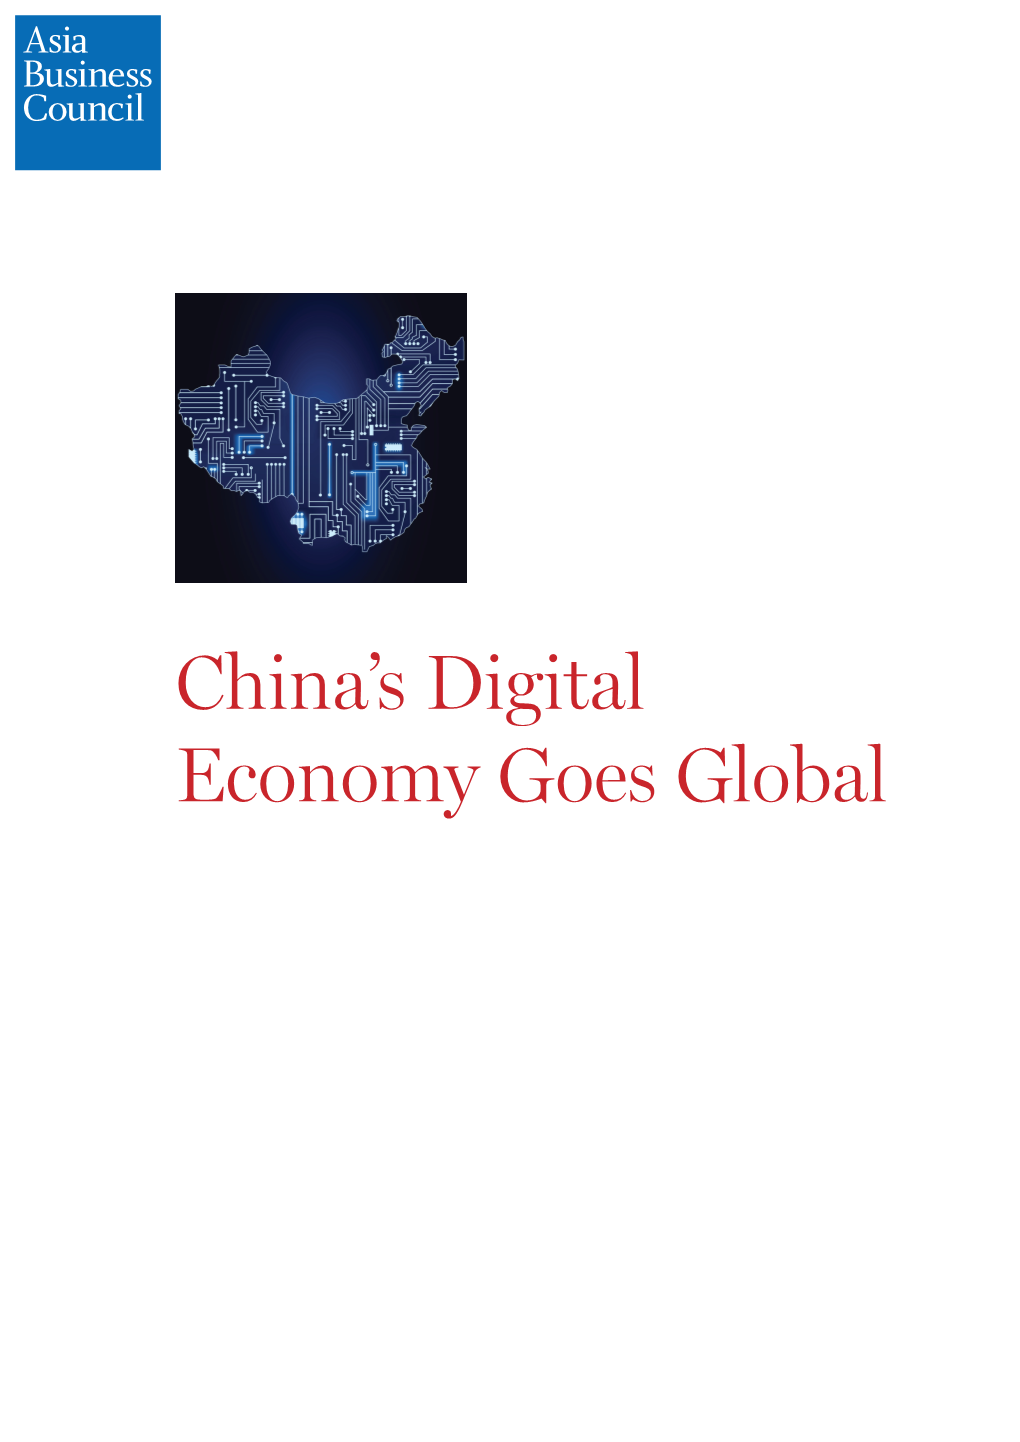 China's Digital Economy Goes Global